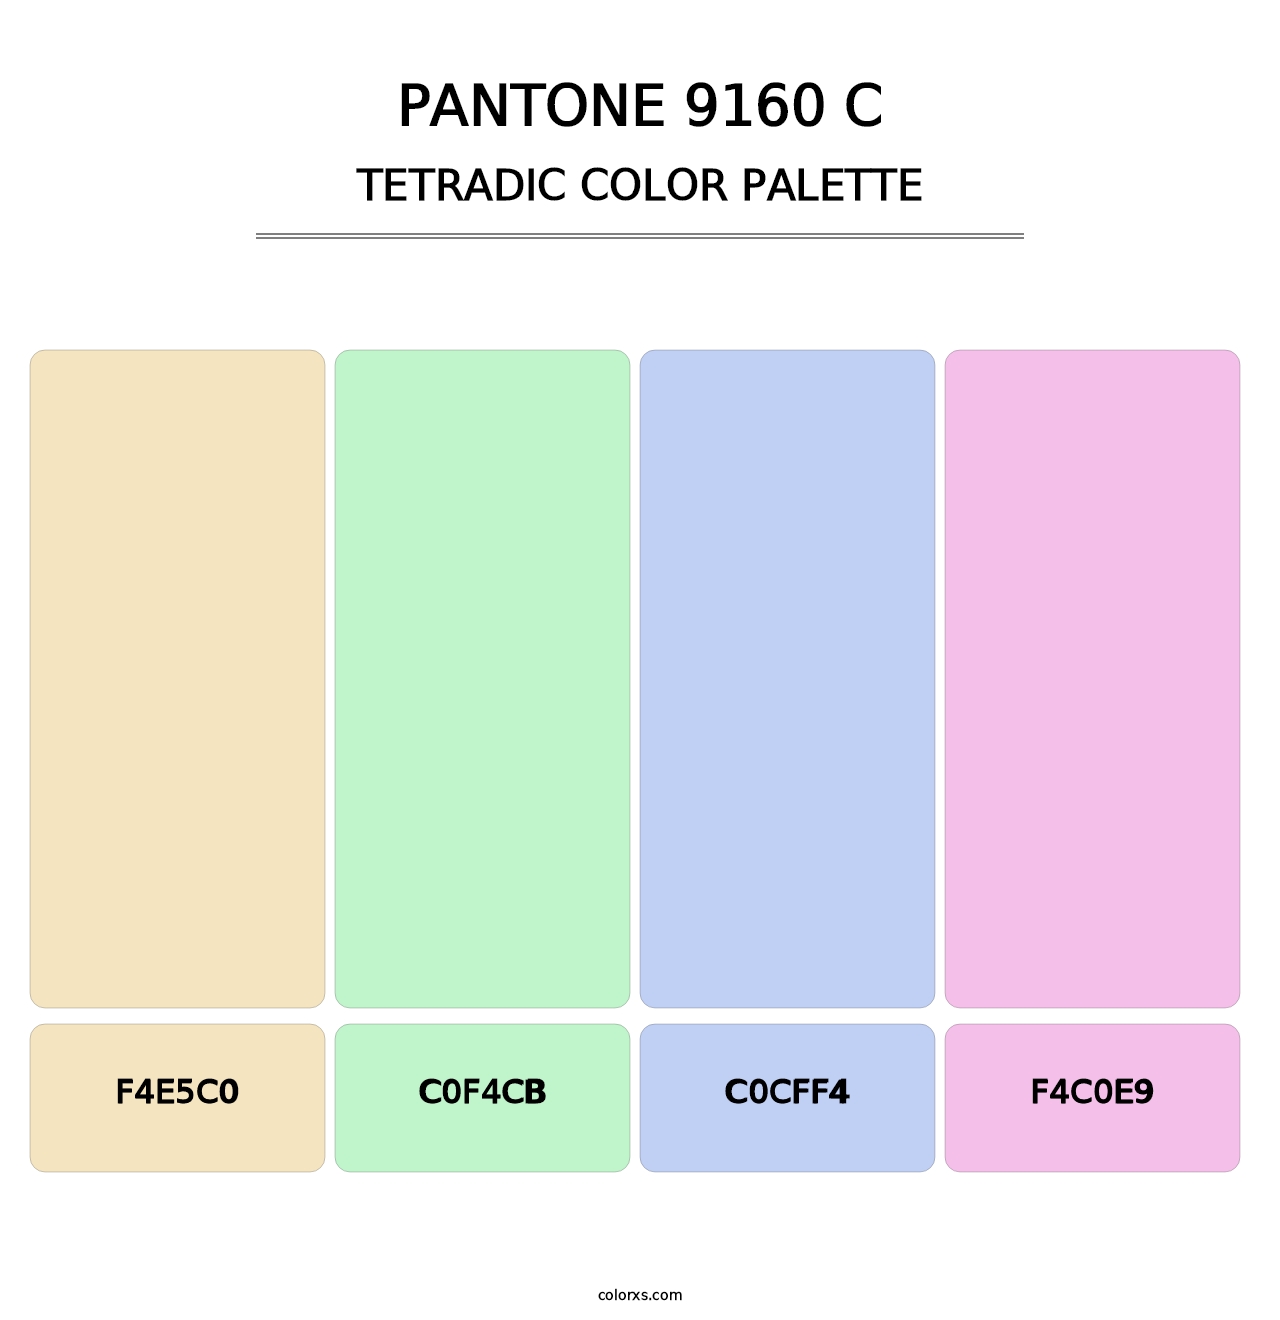 PANTONE 9160 C - Tetradic Color Palette